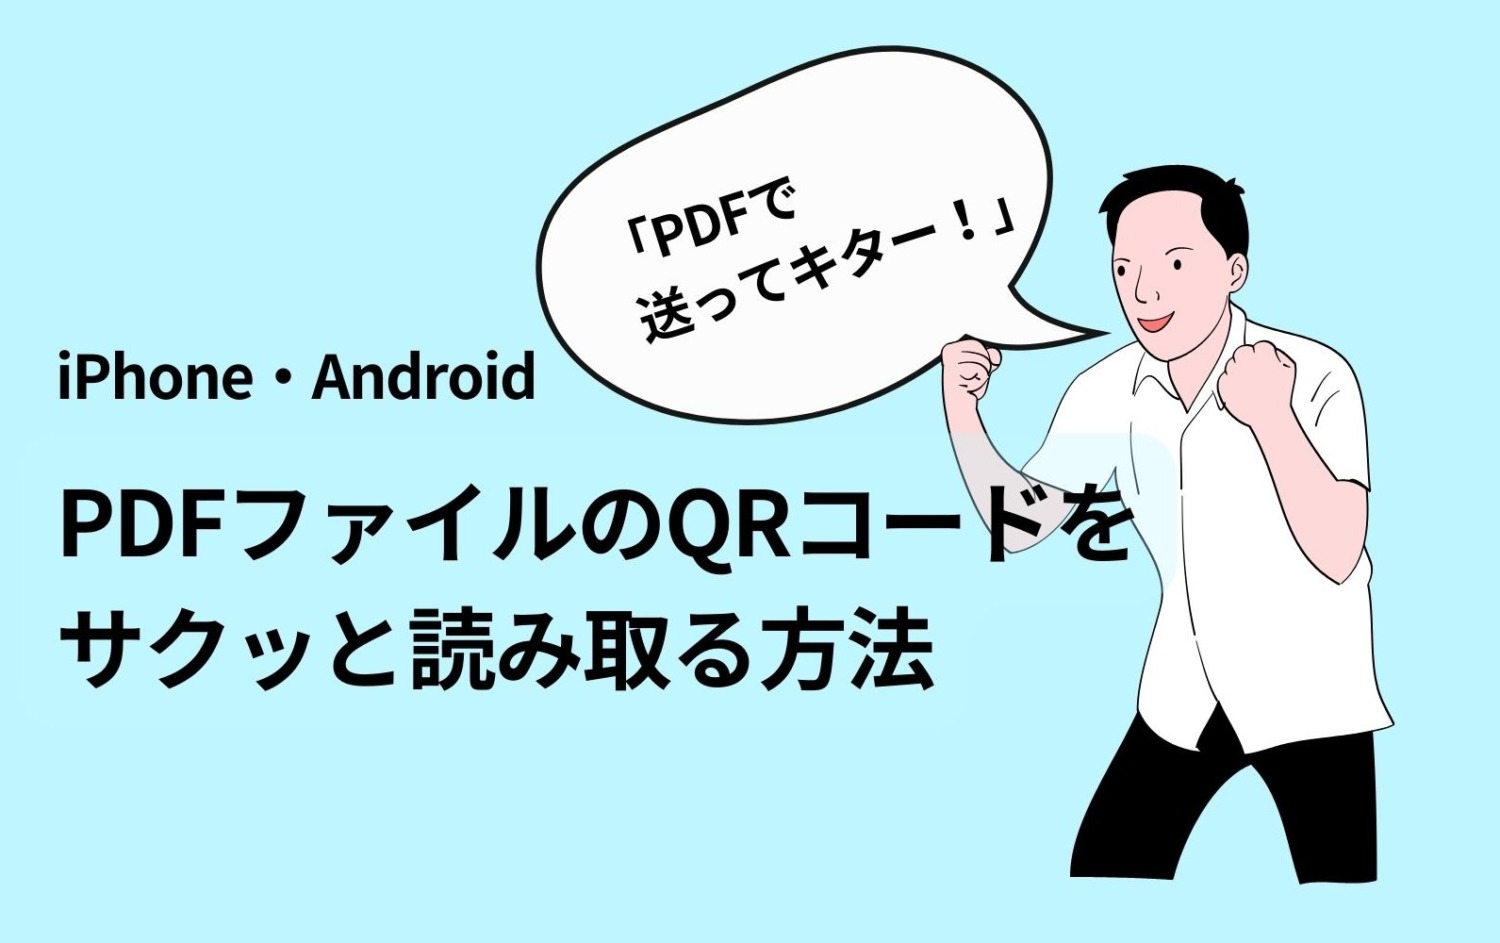 QRコード,PDF,読み取り,iPhone,Android